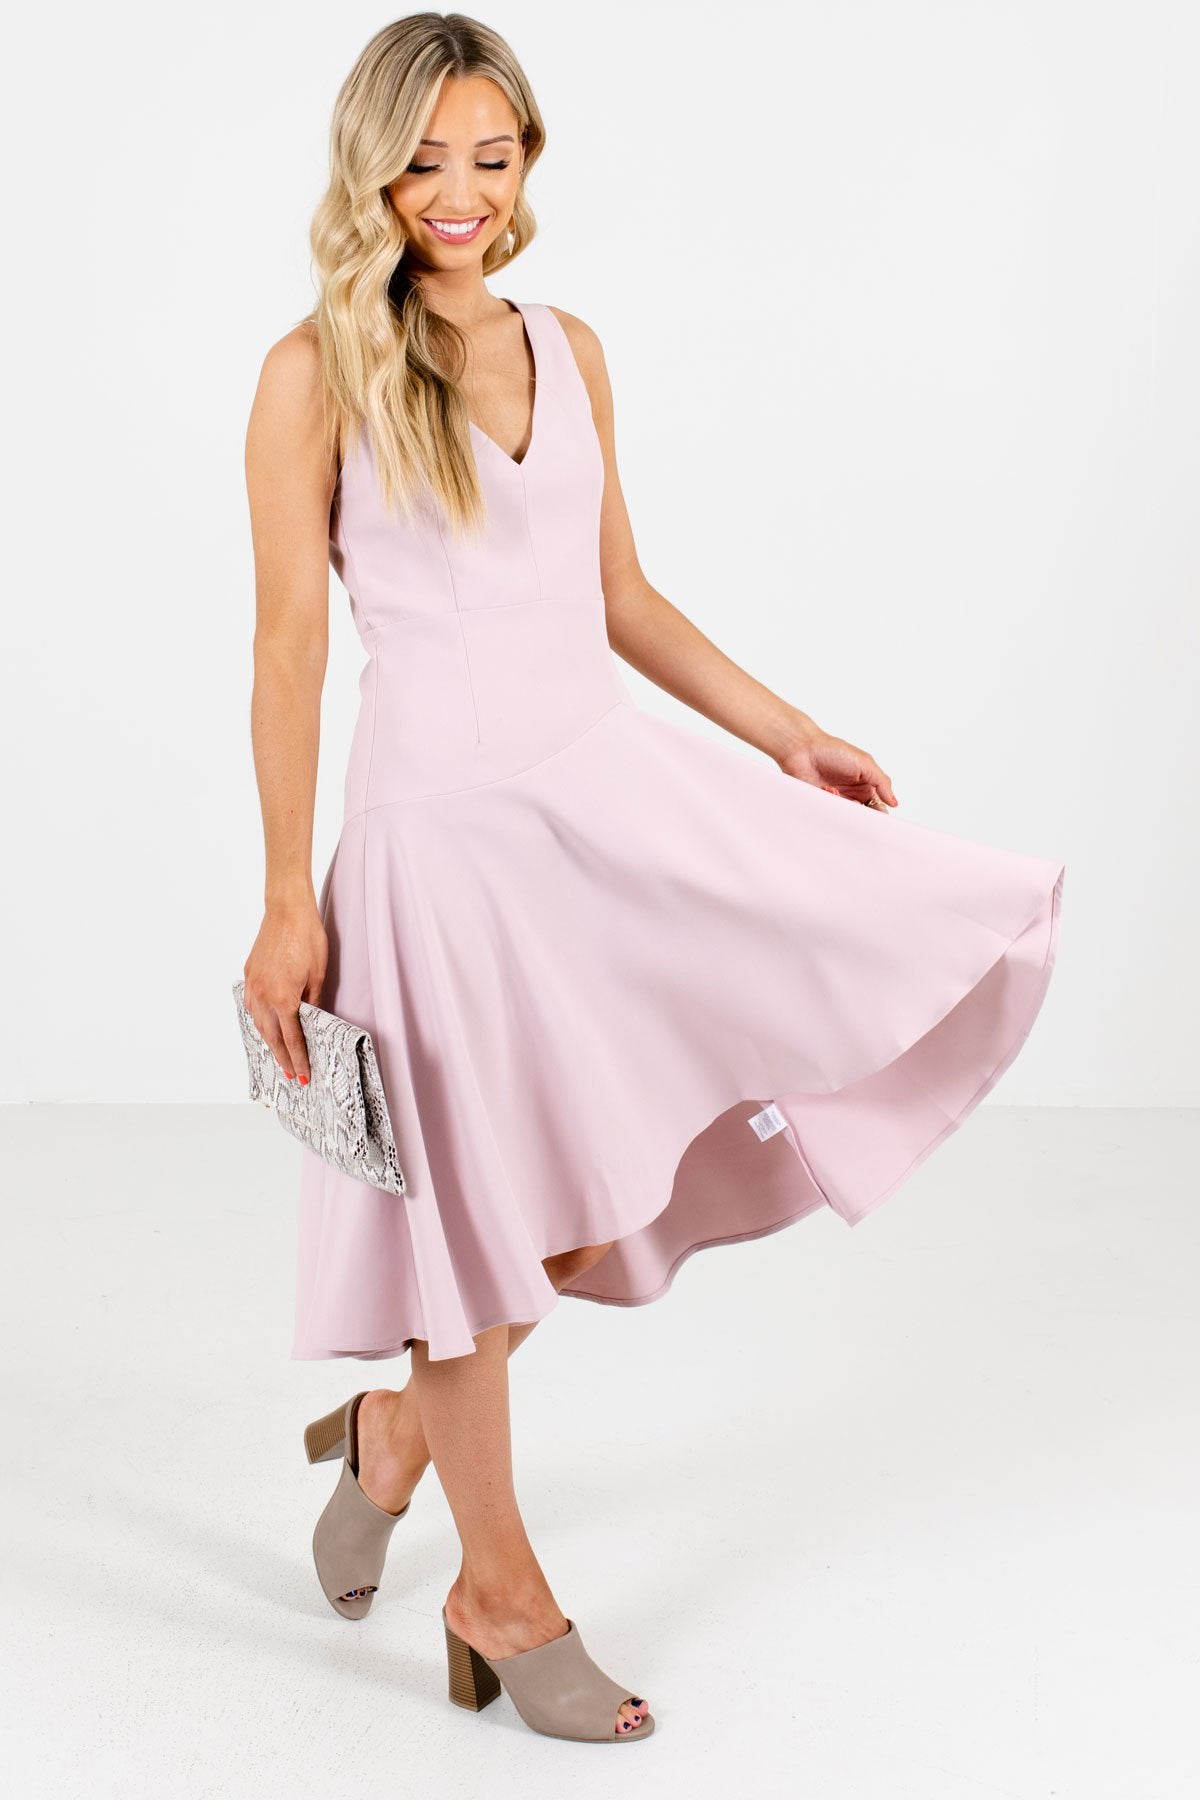 Women's Blush Pink V-Neckline Boutique  Knee-Length Dress